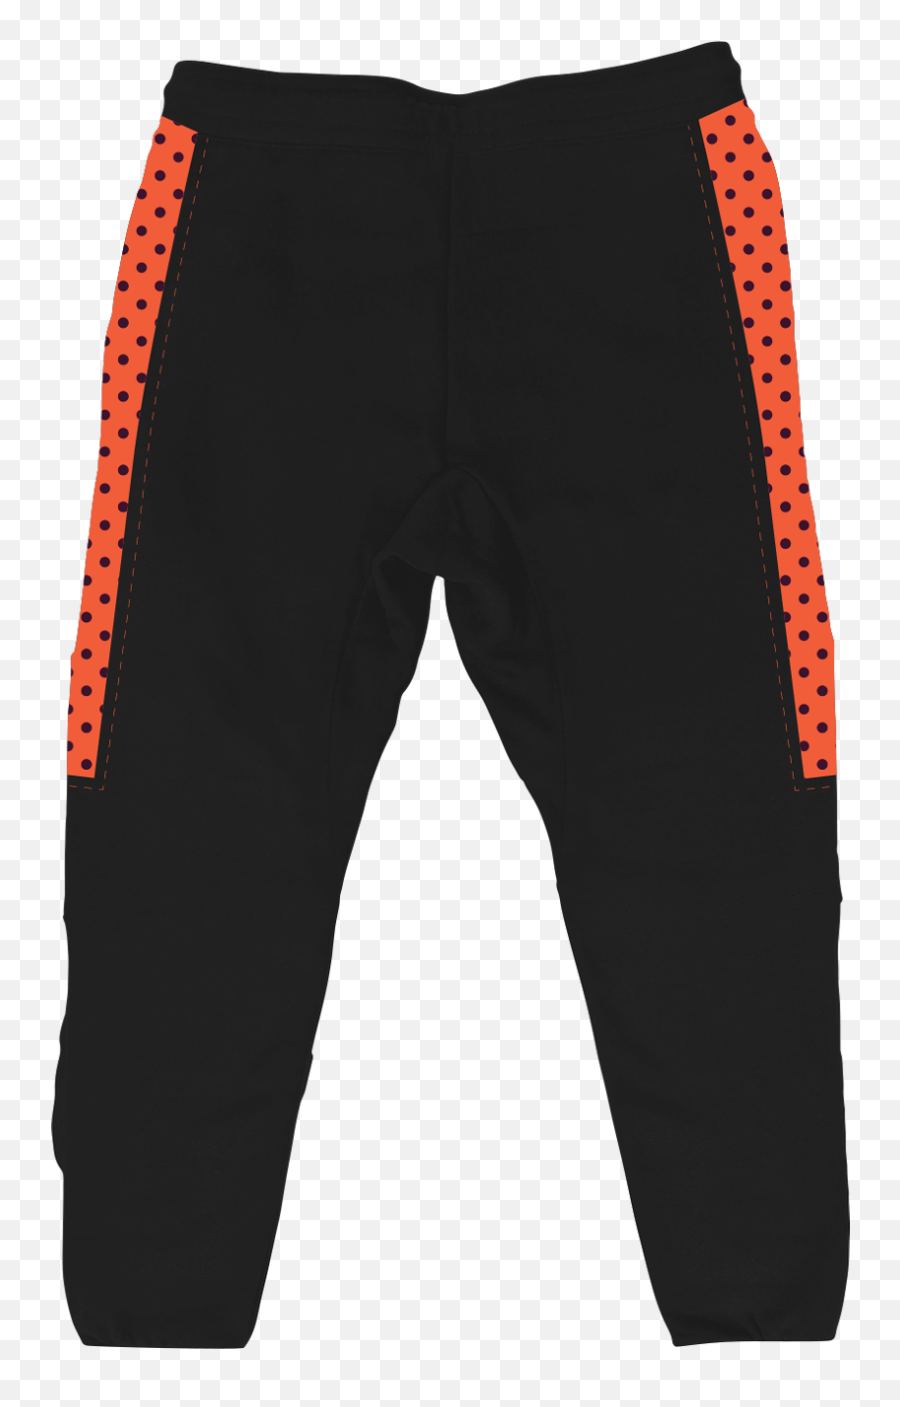 Radiance 2020 Black Track Pants - Sweatpants Emoji,Emoji Jogger Pants Amazon